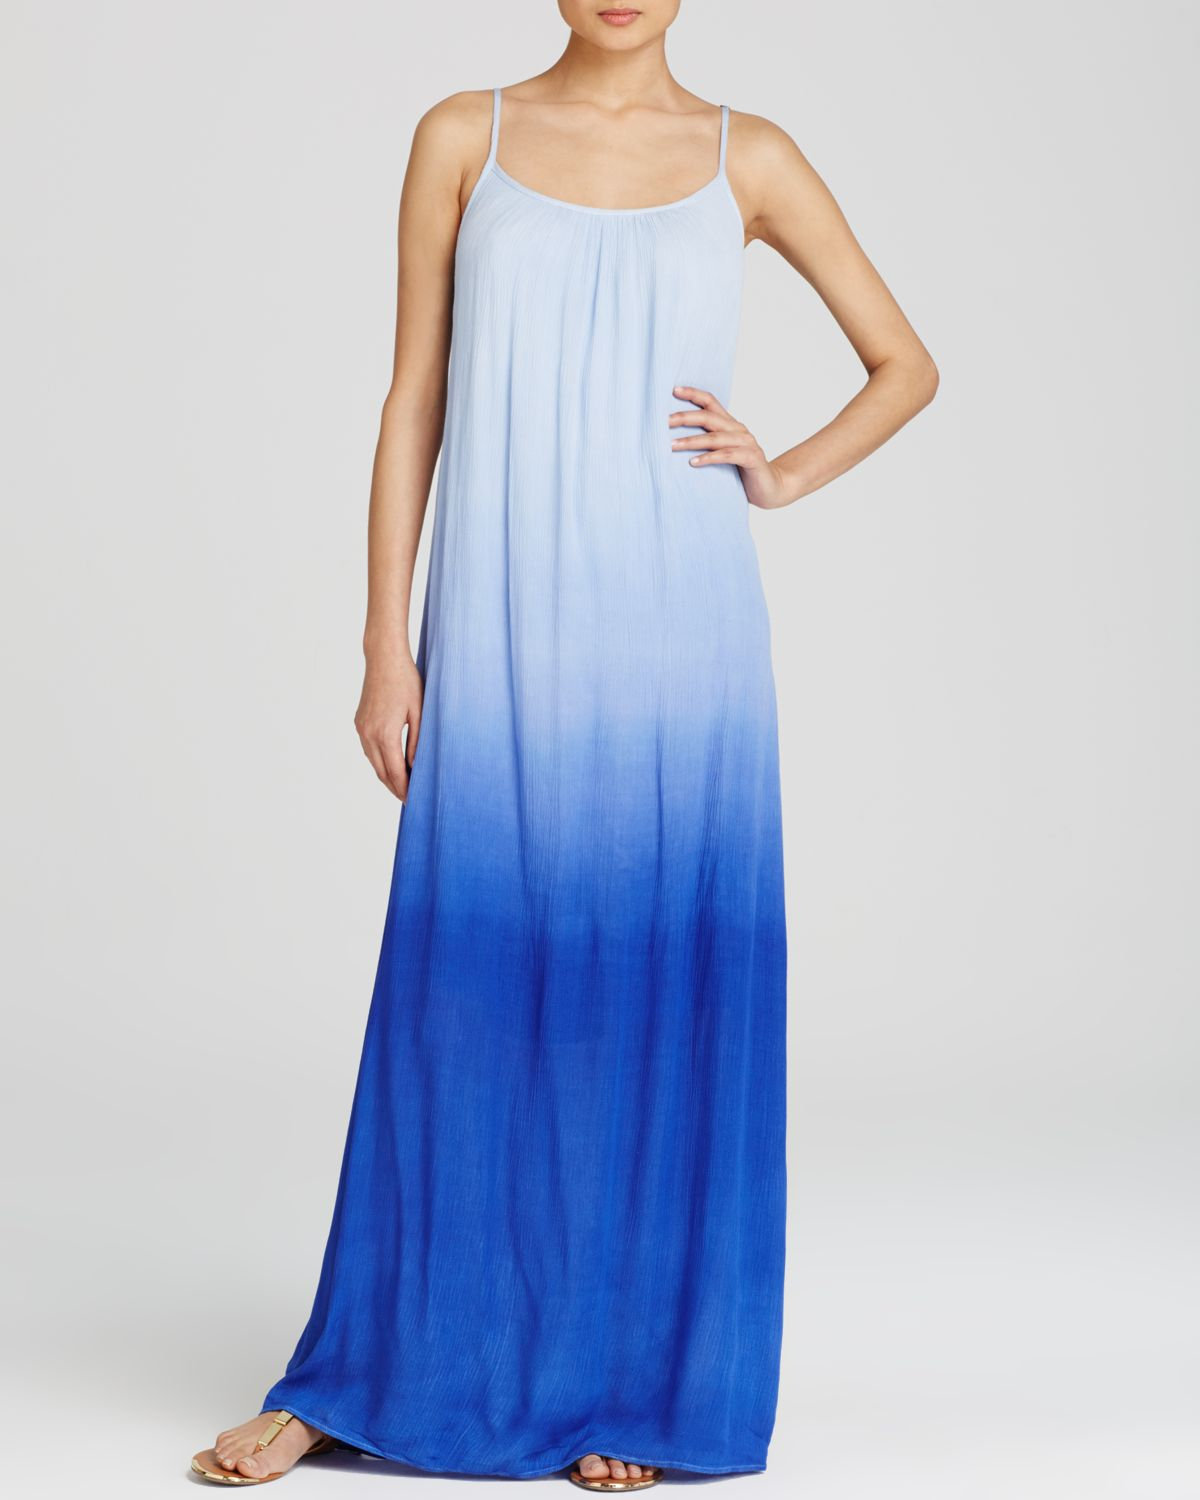 Splendid Dress - Ombre Maxi in Blue (Cobalt Blue) - Save 50% | Lyst